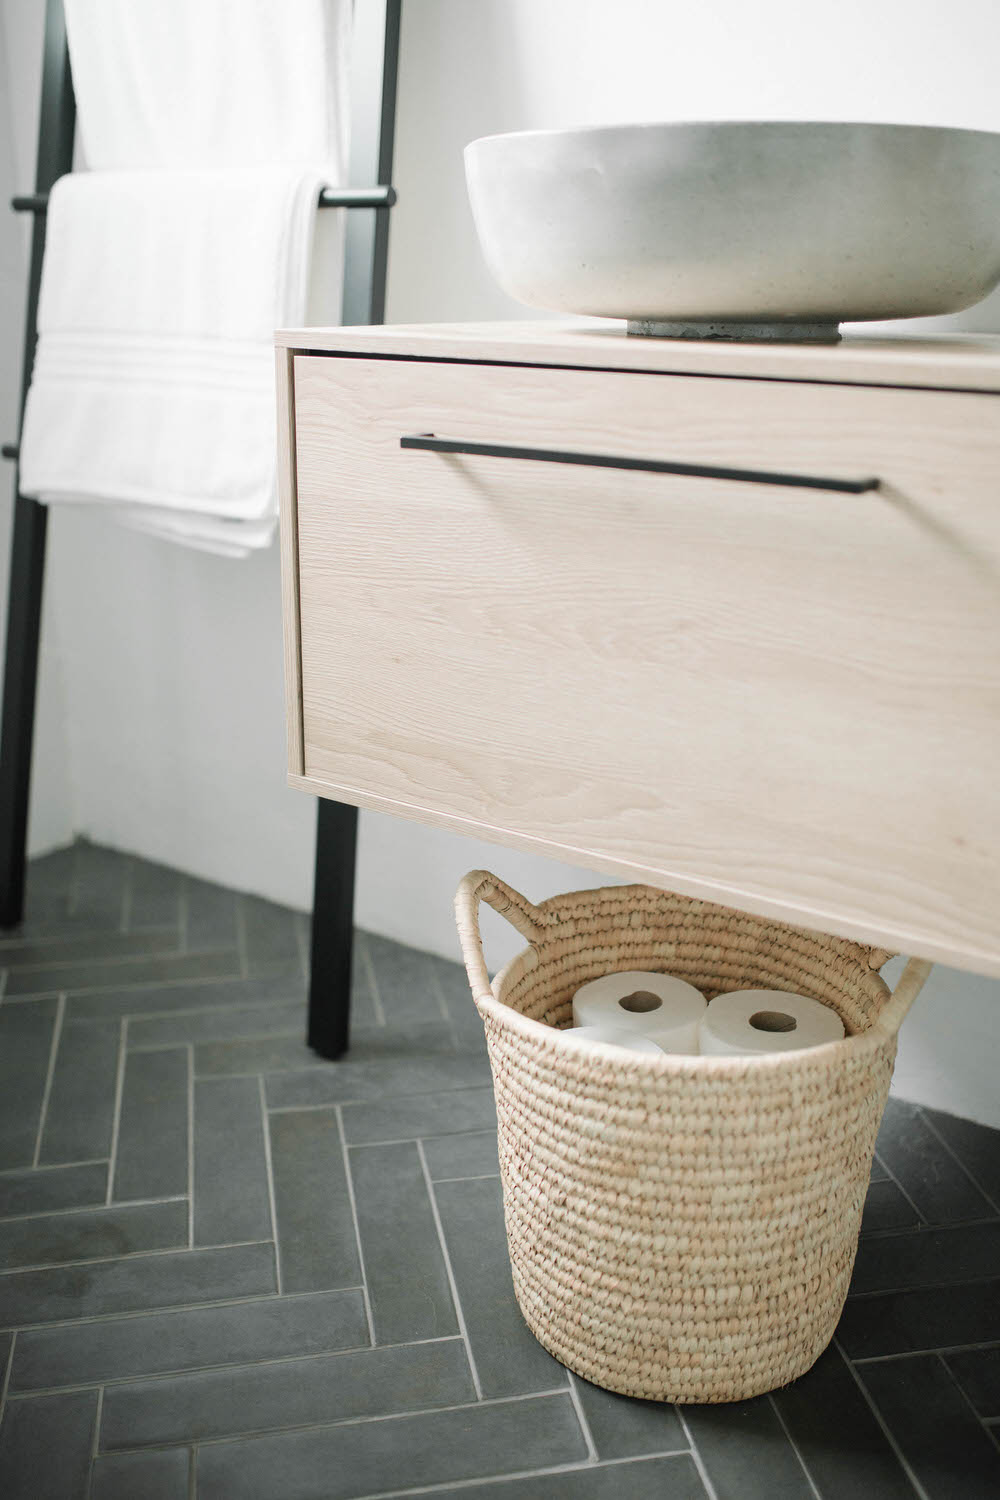 Basket of toilet rolls in scandi style bathroom